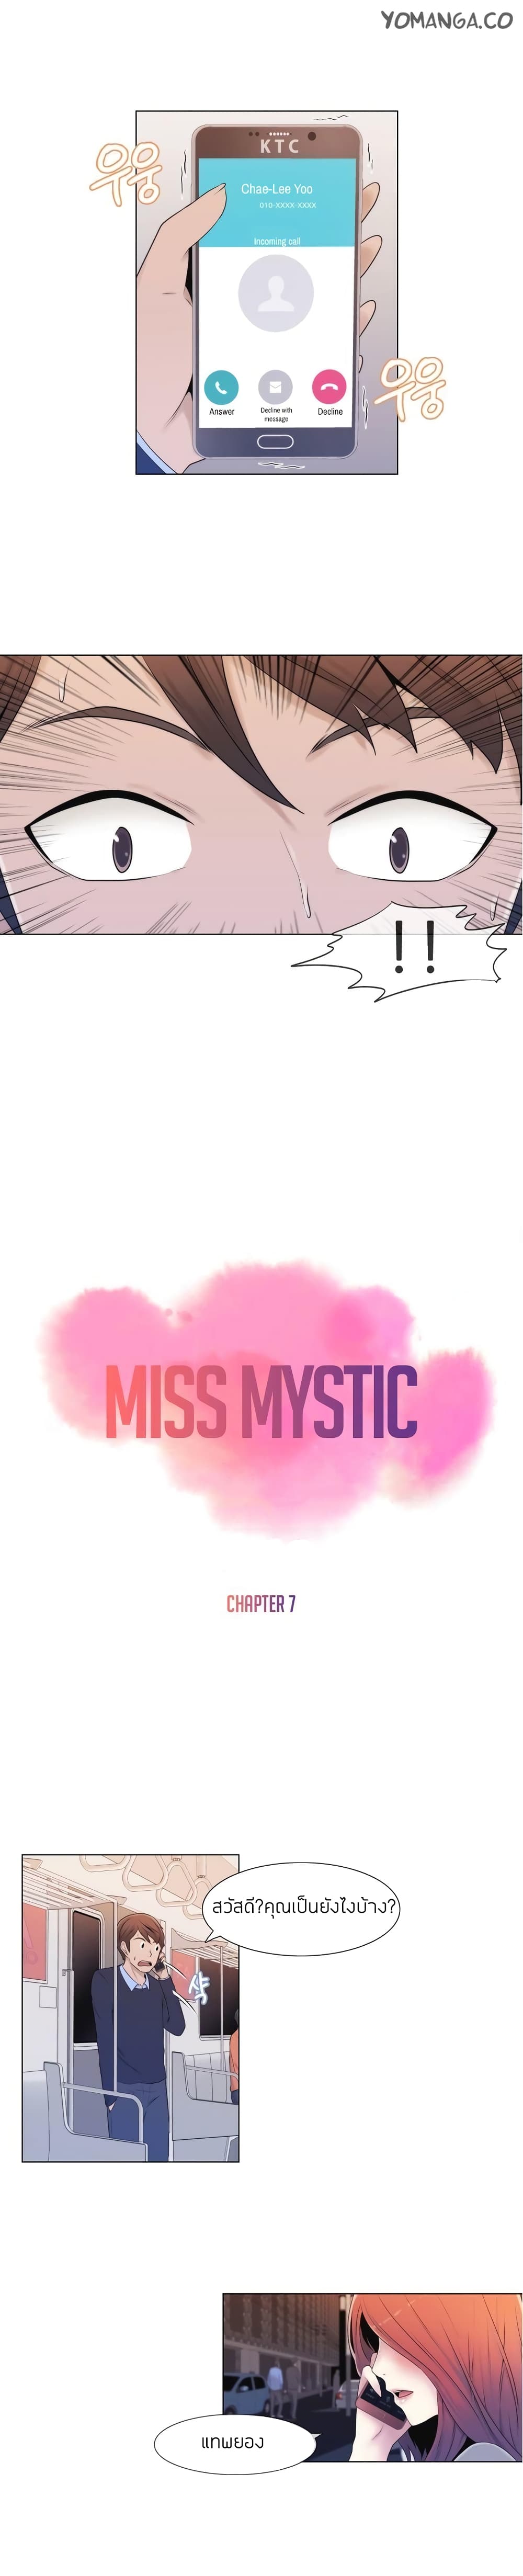 Miss Mystic 7 (7)